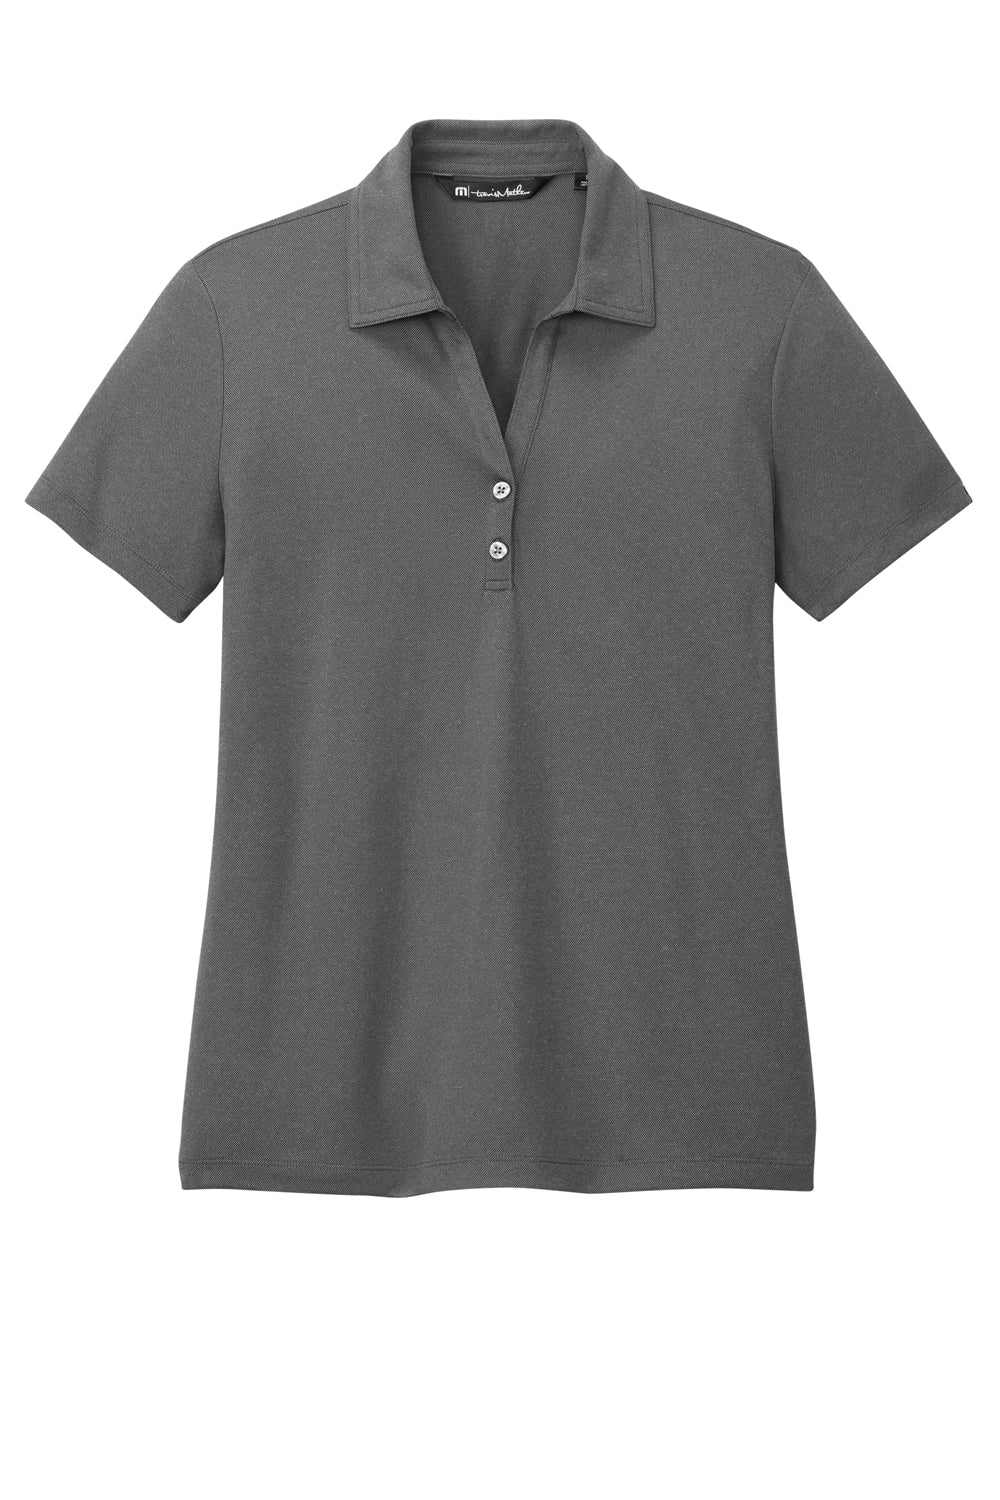 TravisMathew TM1WX002 Womens Coto Performance Wrinkle Resistant Short Sleeve Polo Shirt Quiet Shade Grey/Black Flat Front